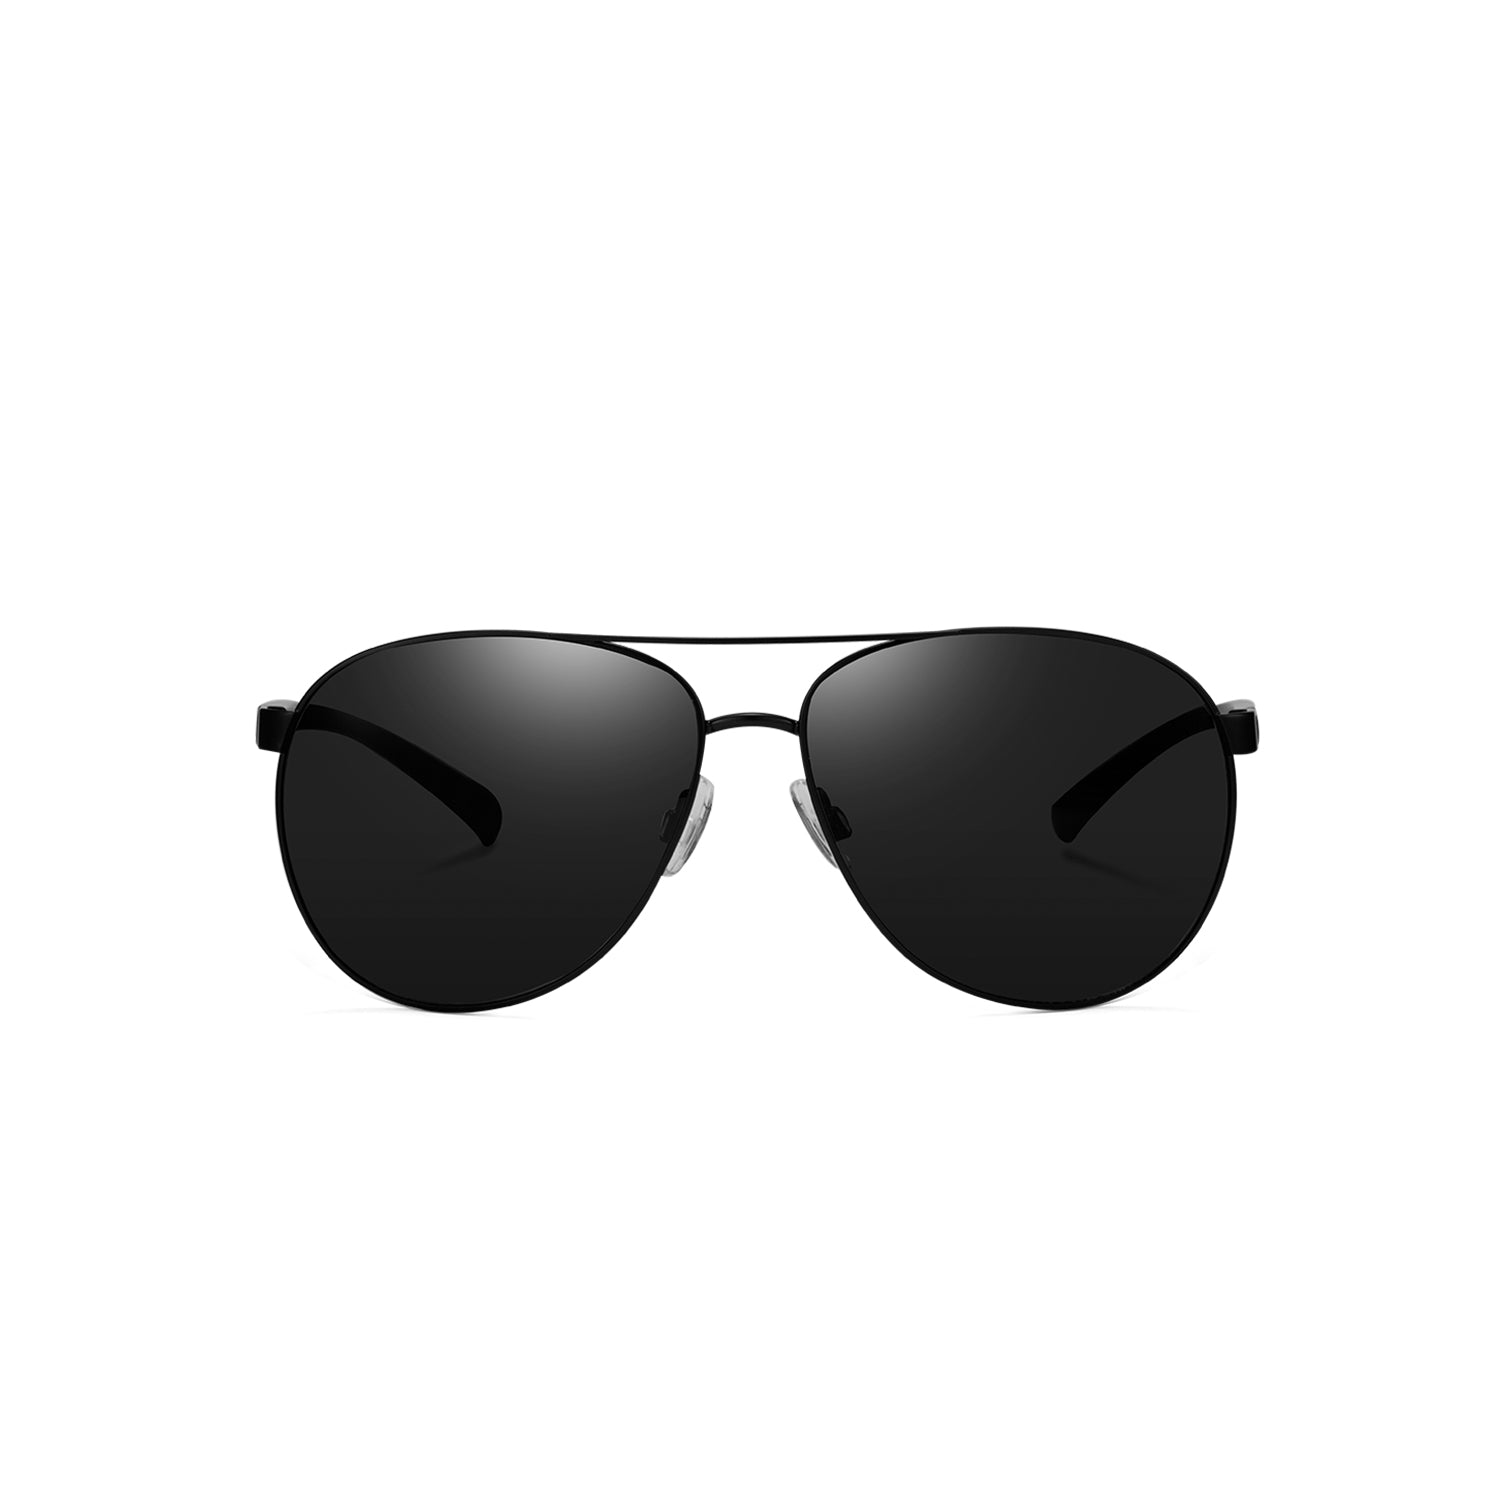 Sunglasses Elm Park Pilot in Matte Black